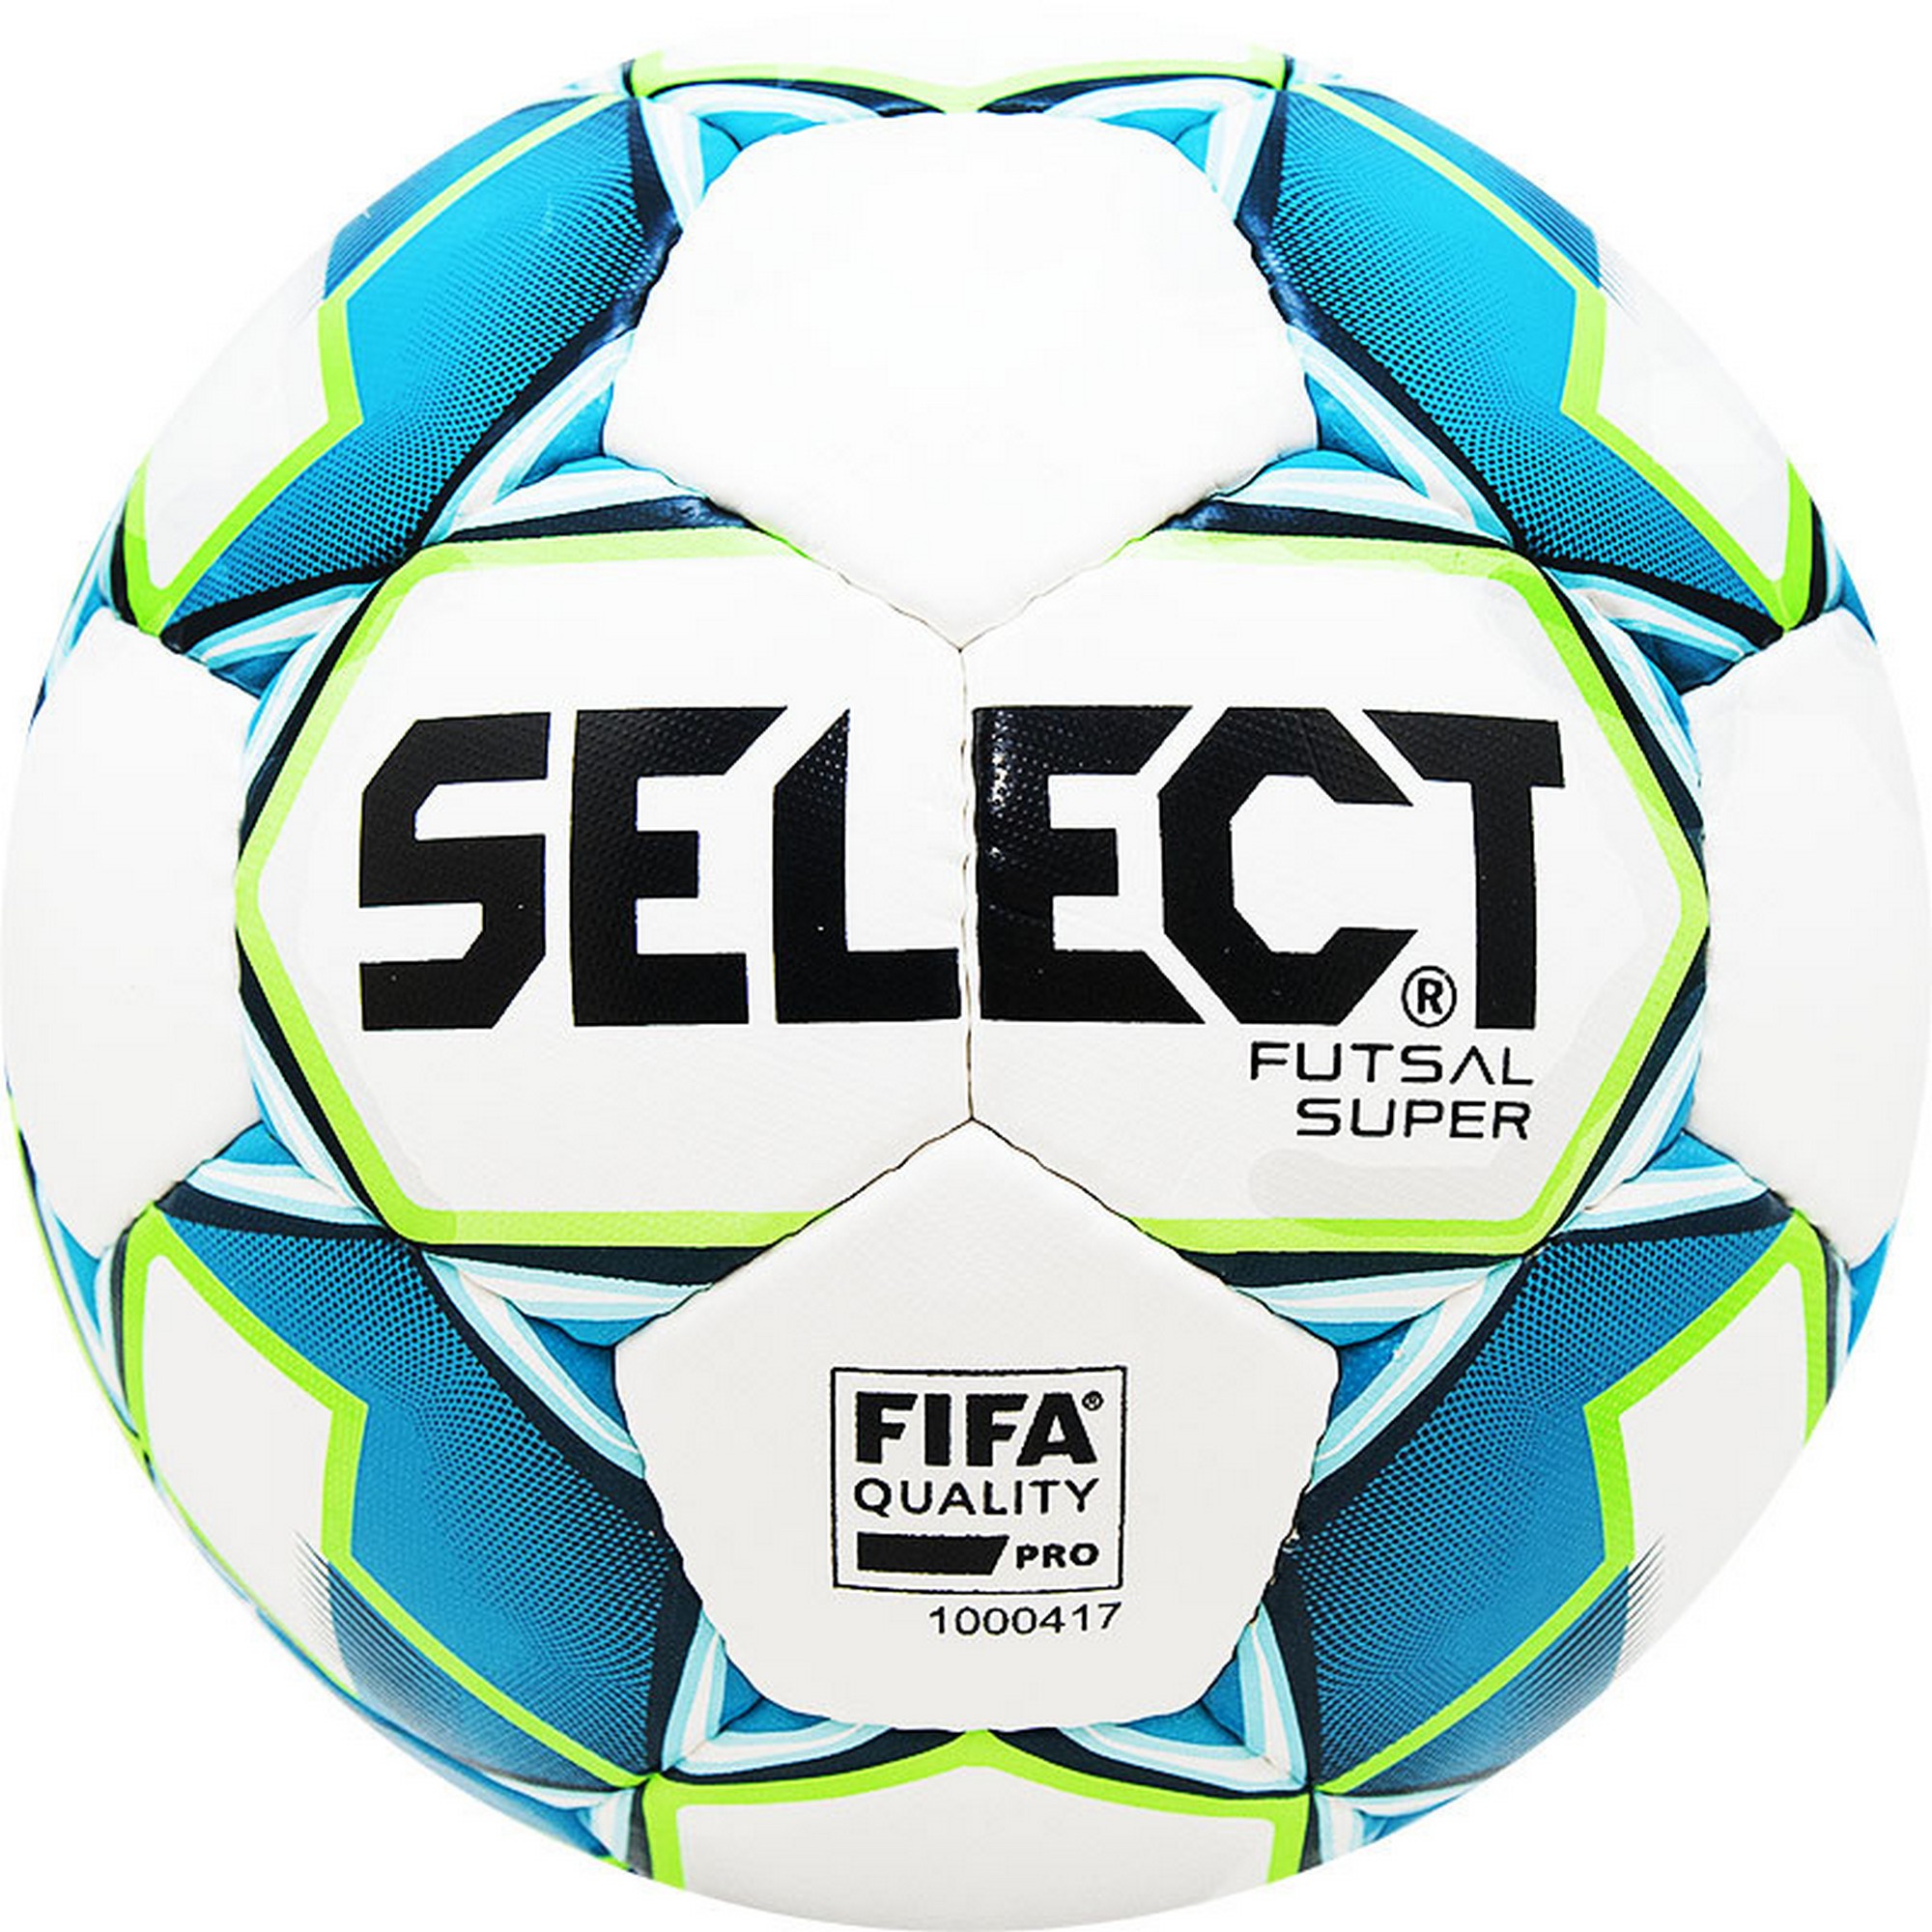   Select Futsal Super FIFA Pro 3613460002 .4